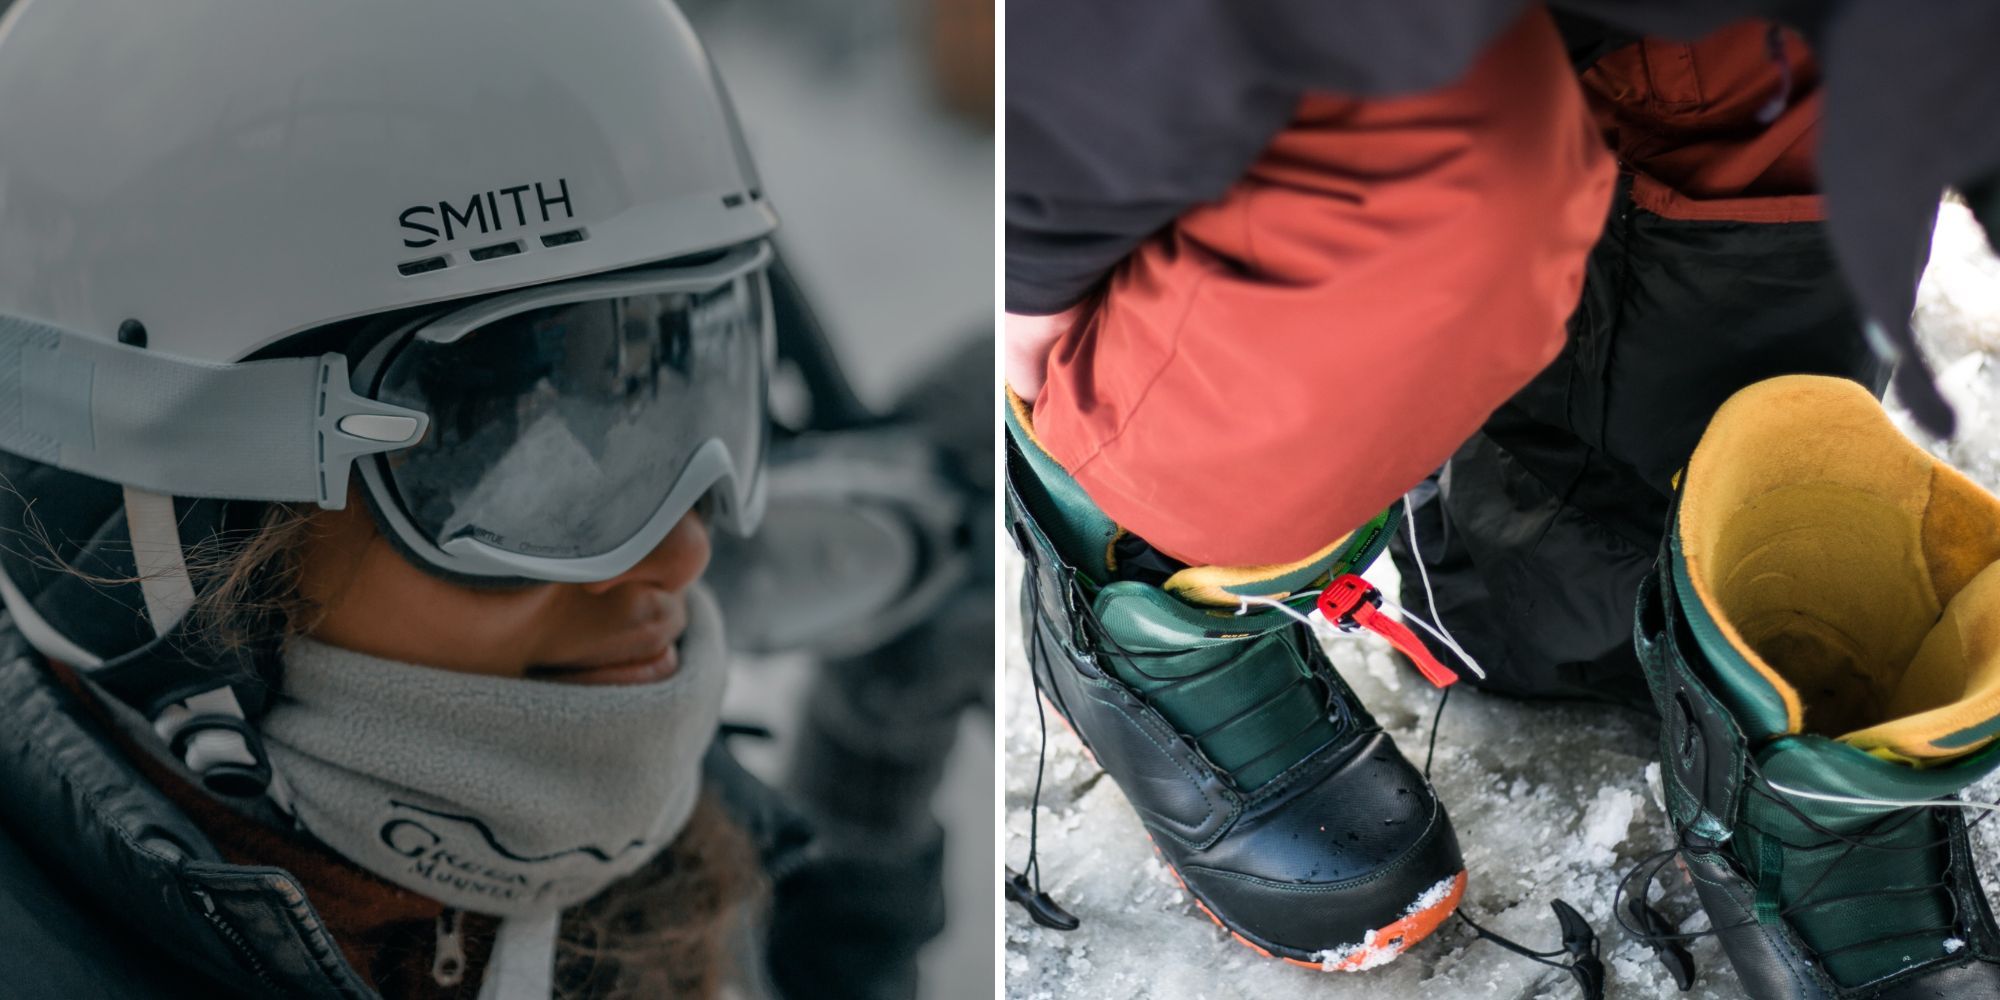 Protective ski gear